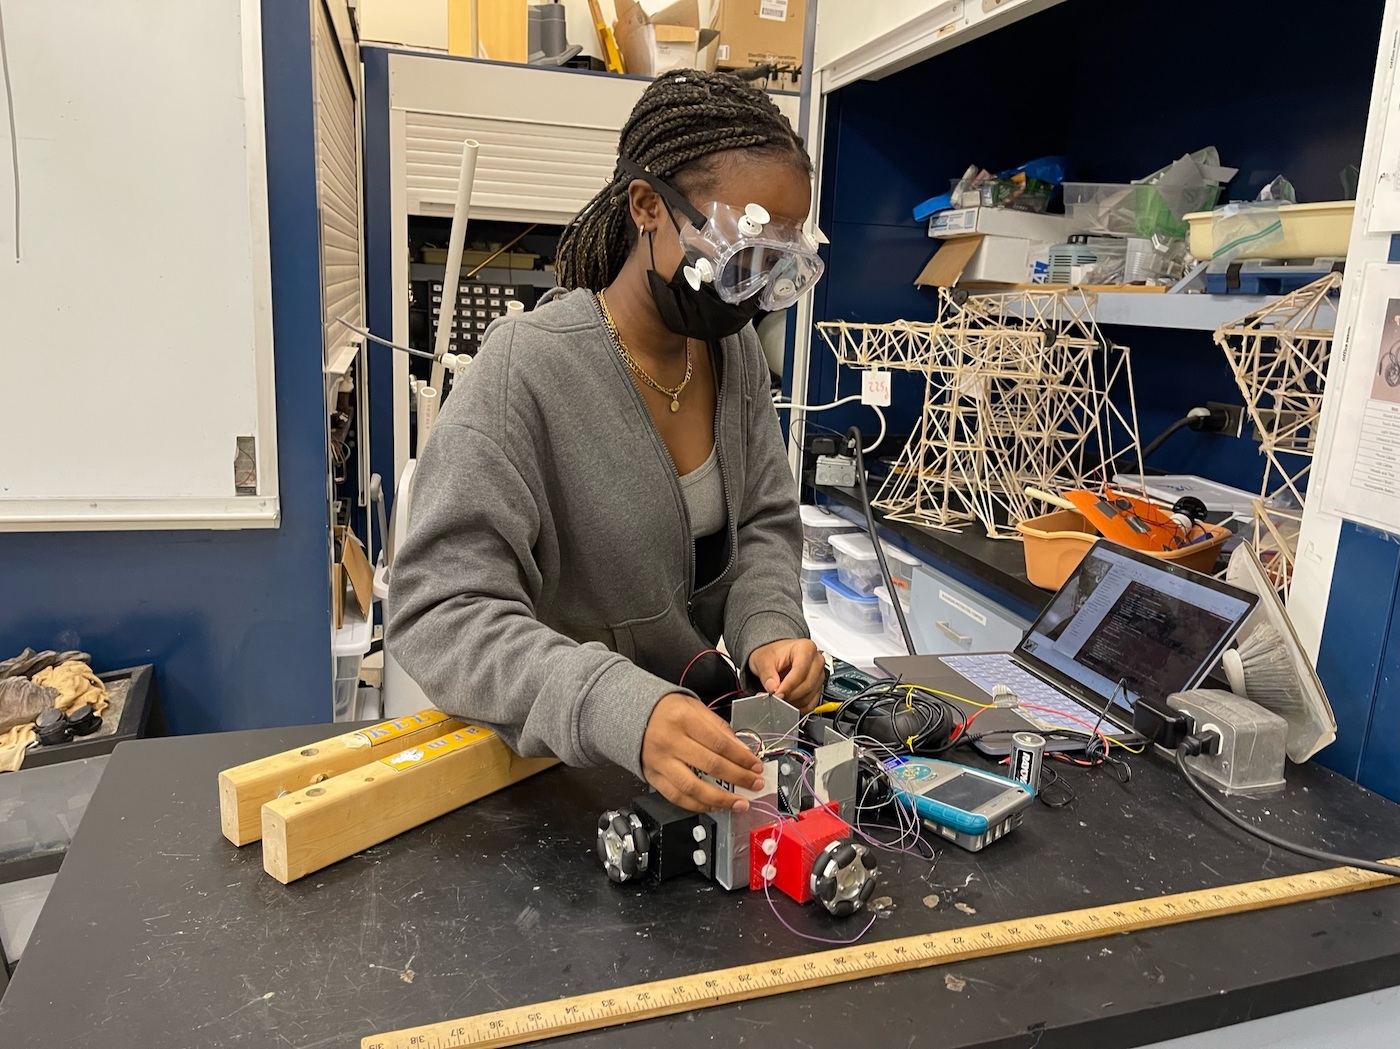 Elizabeth Nyamwange wearing safety goggles tinkering on an engineering work table. 